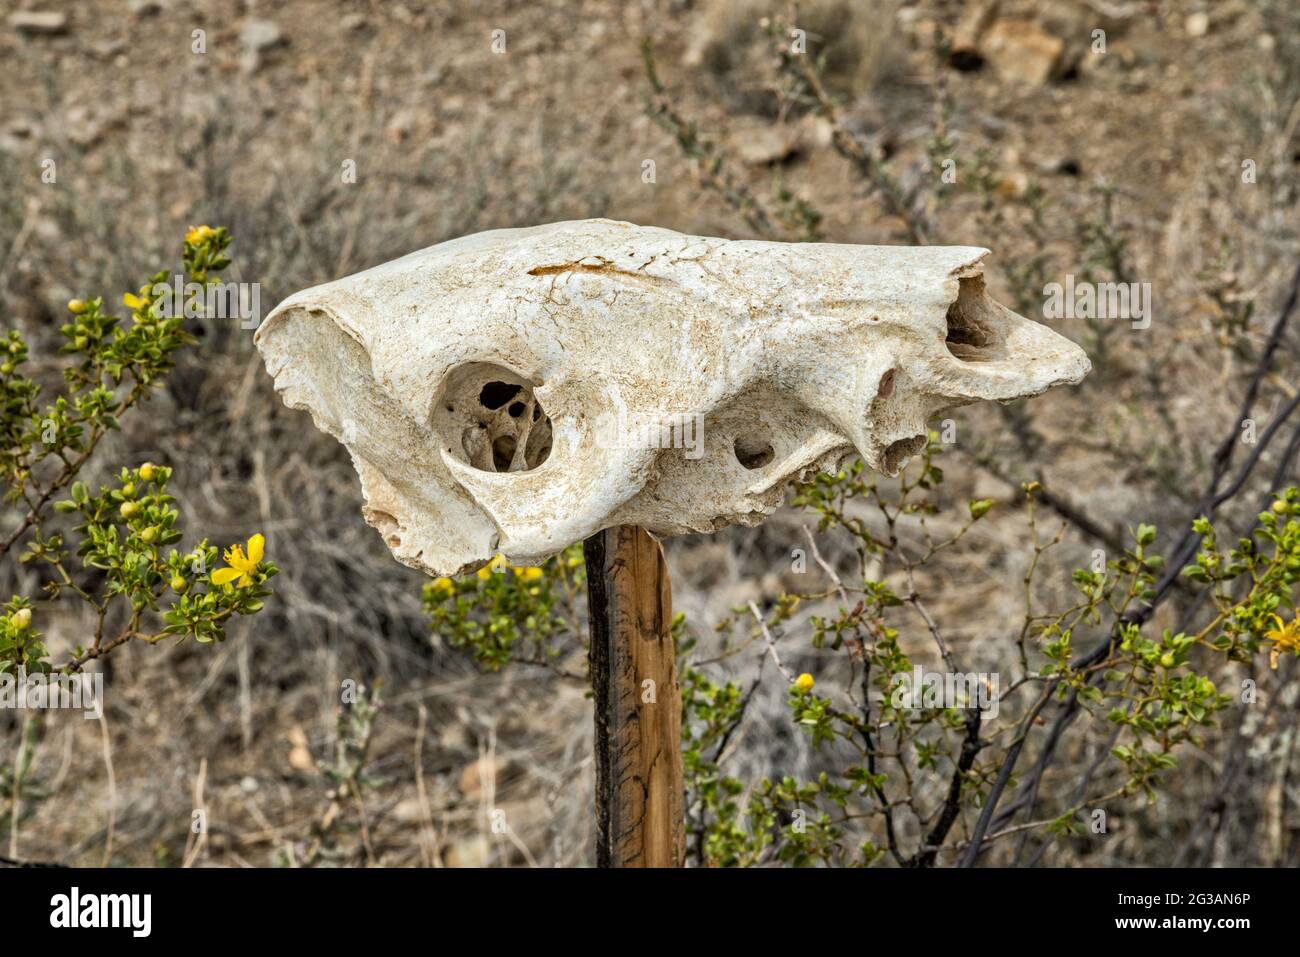 Animal skull, creosote bush in bloom, at McGuirks Tanks campsite, El Solitario area, Big Bend Ranch State Park, Texas, USA Stock Photo